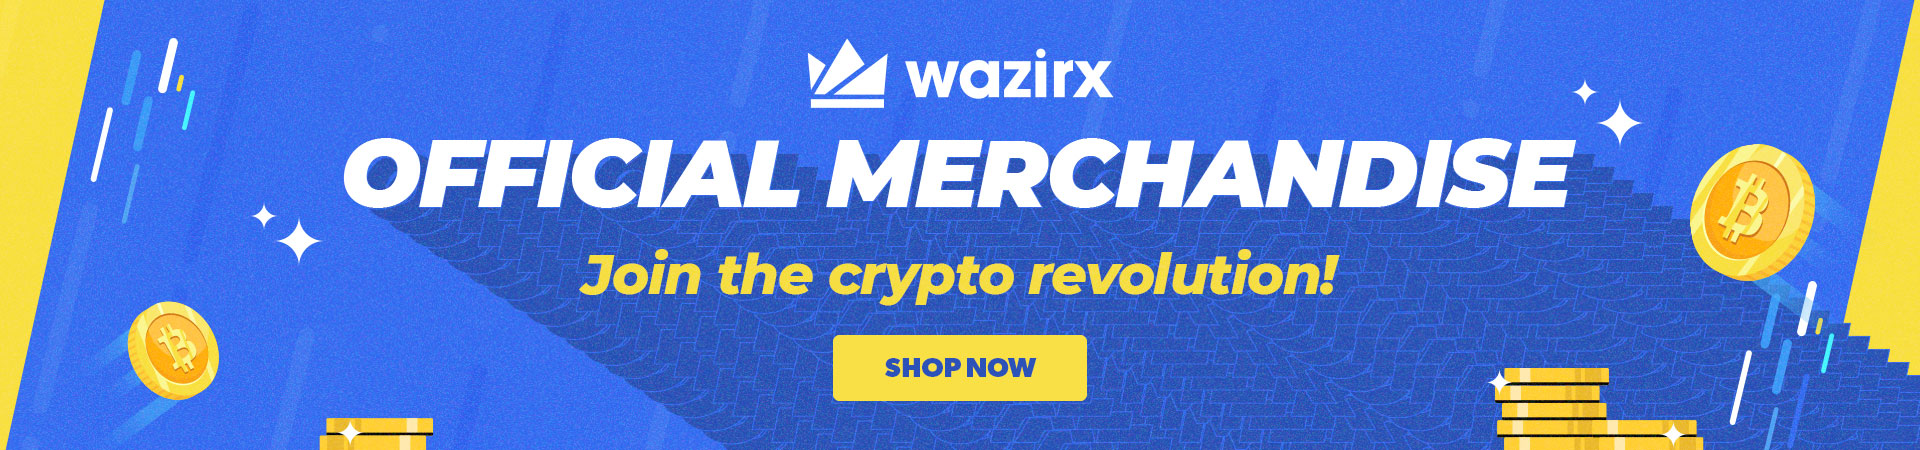 wazirx-merchandise